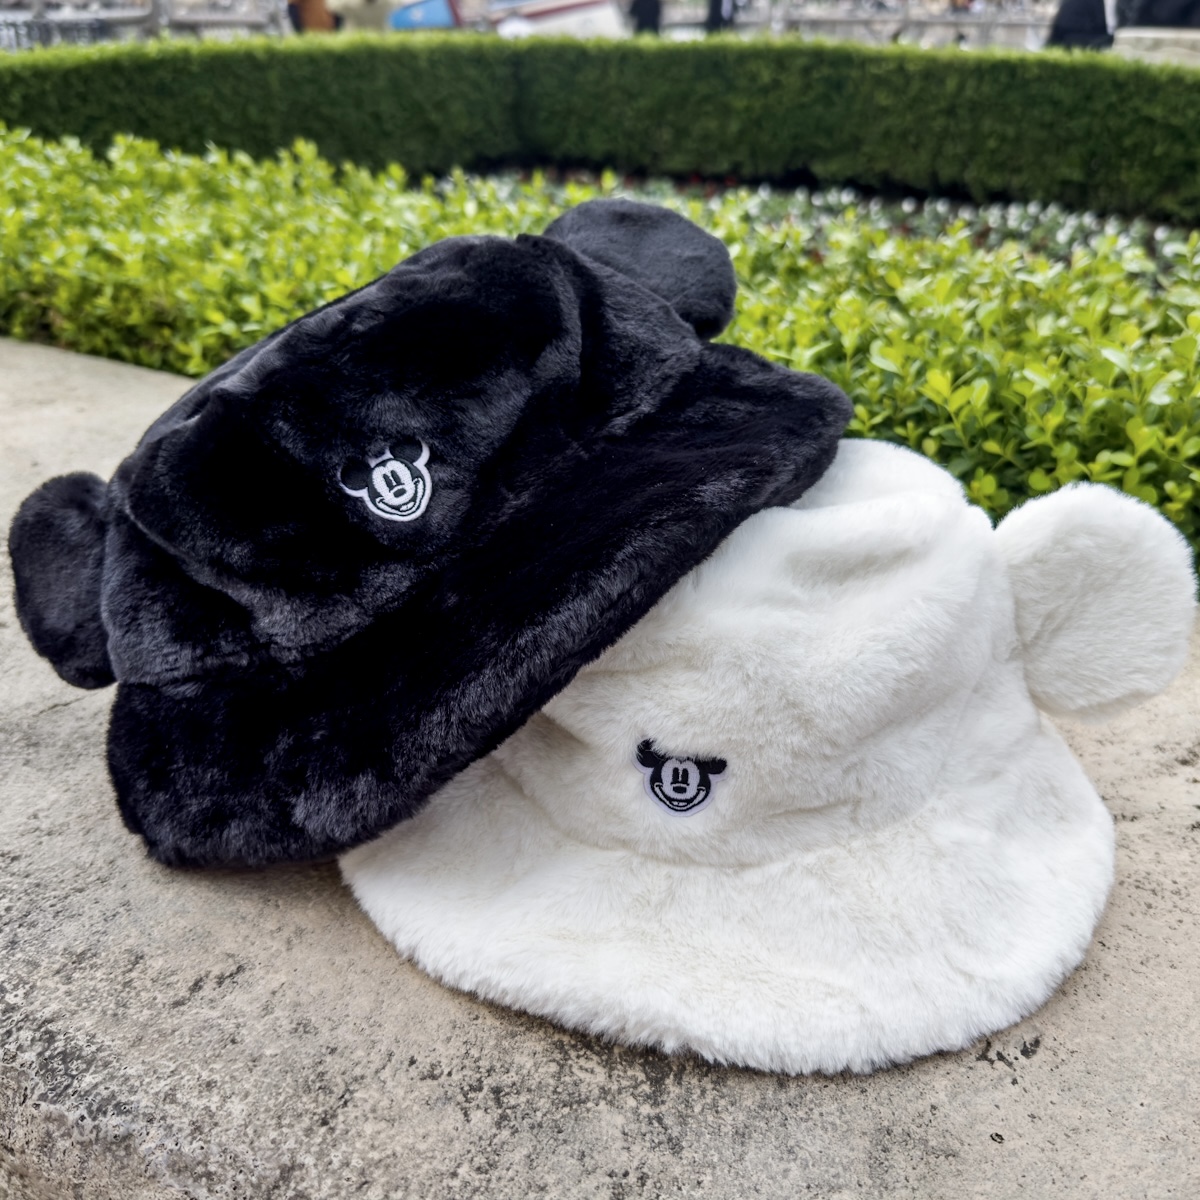 Emiria Wiz(エミリアウィズ) 帽子 帽子 (その他) ベレー帽 ベージュ×黒 合成皮革